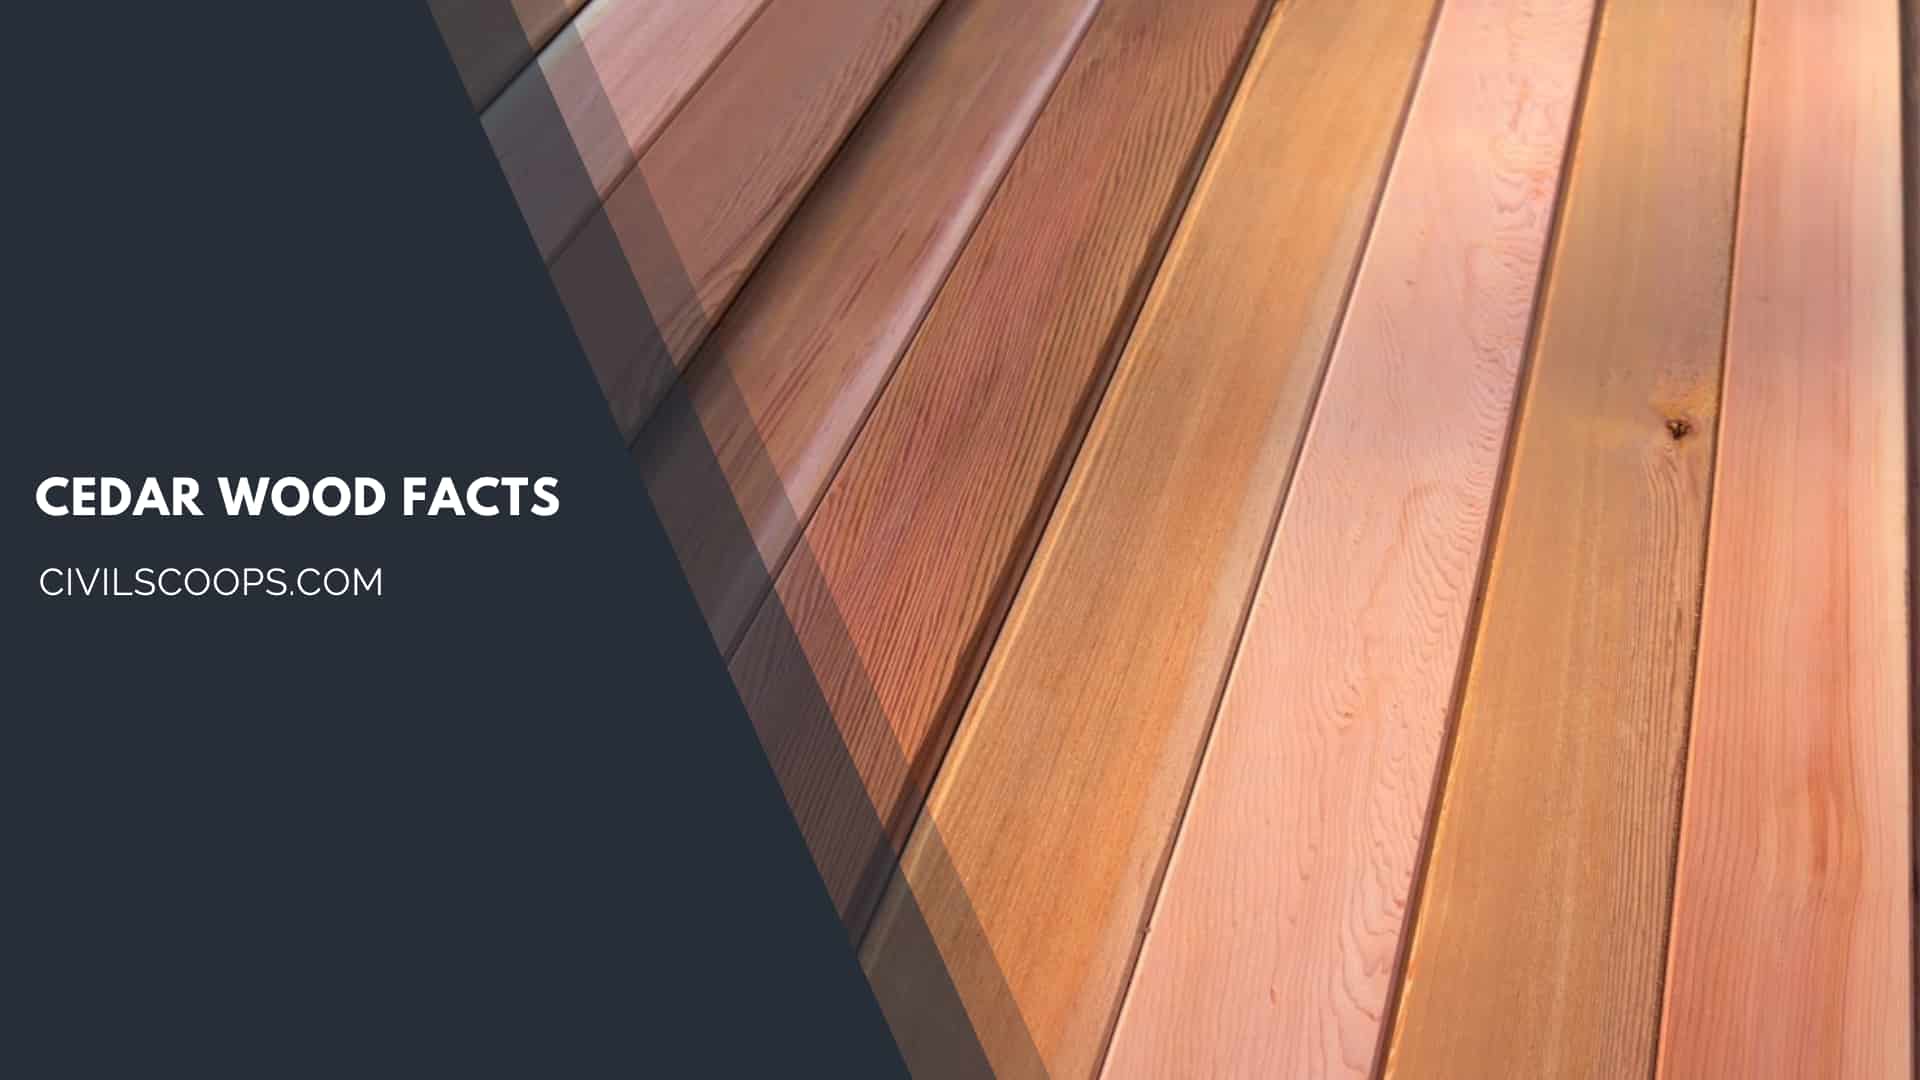 Cedar Wood Facts